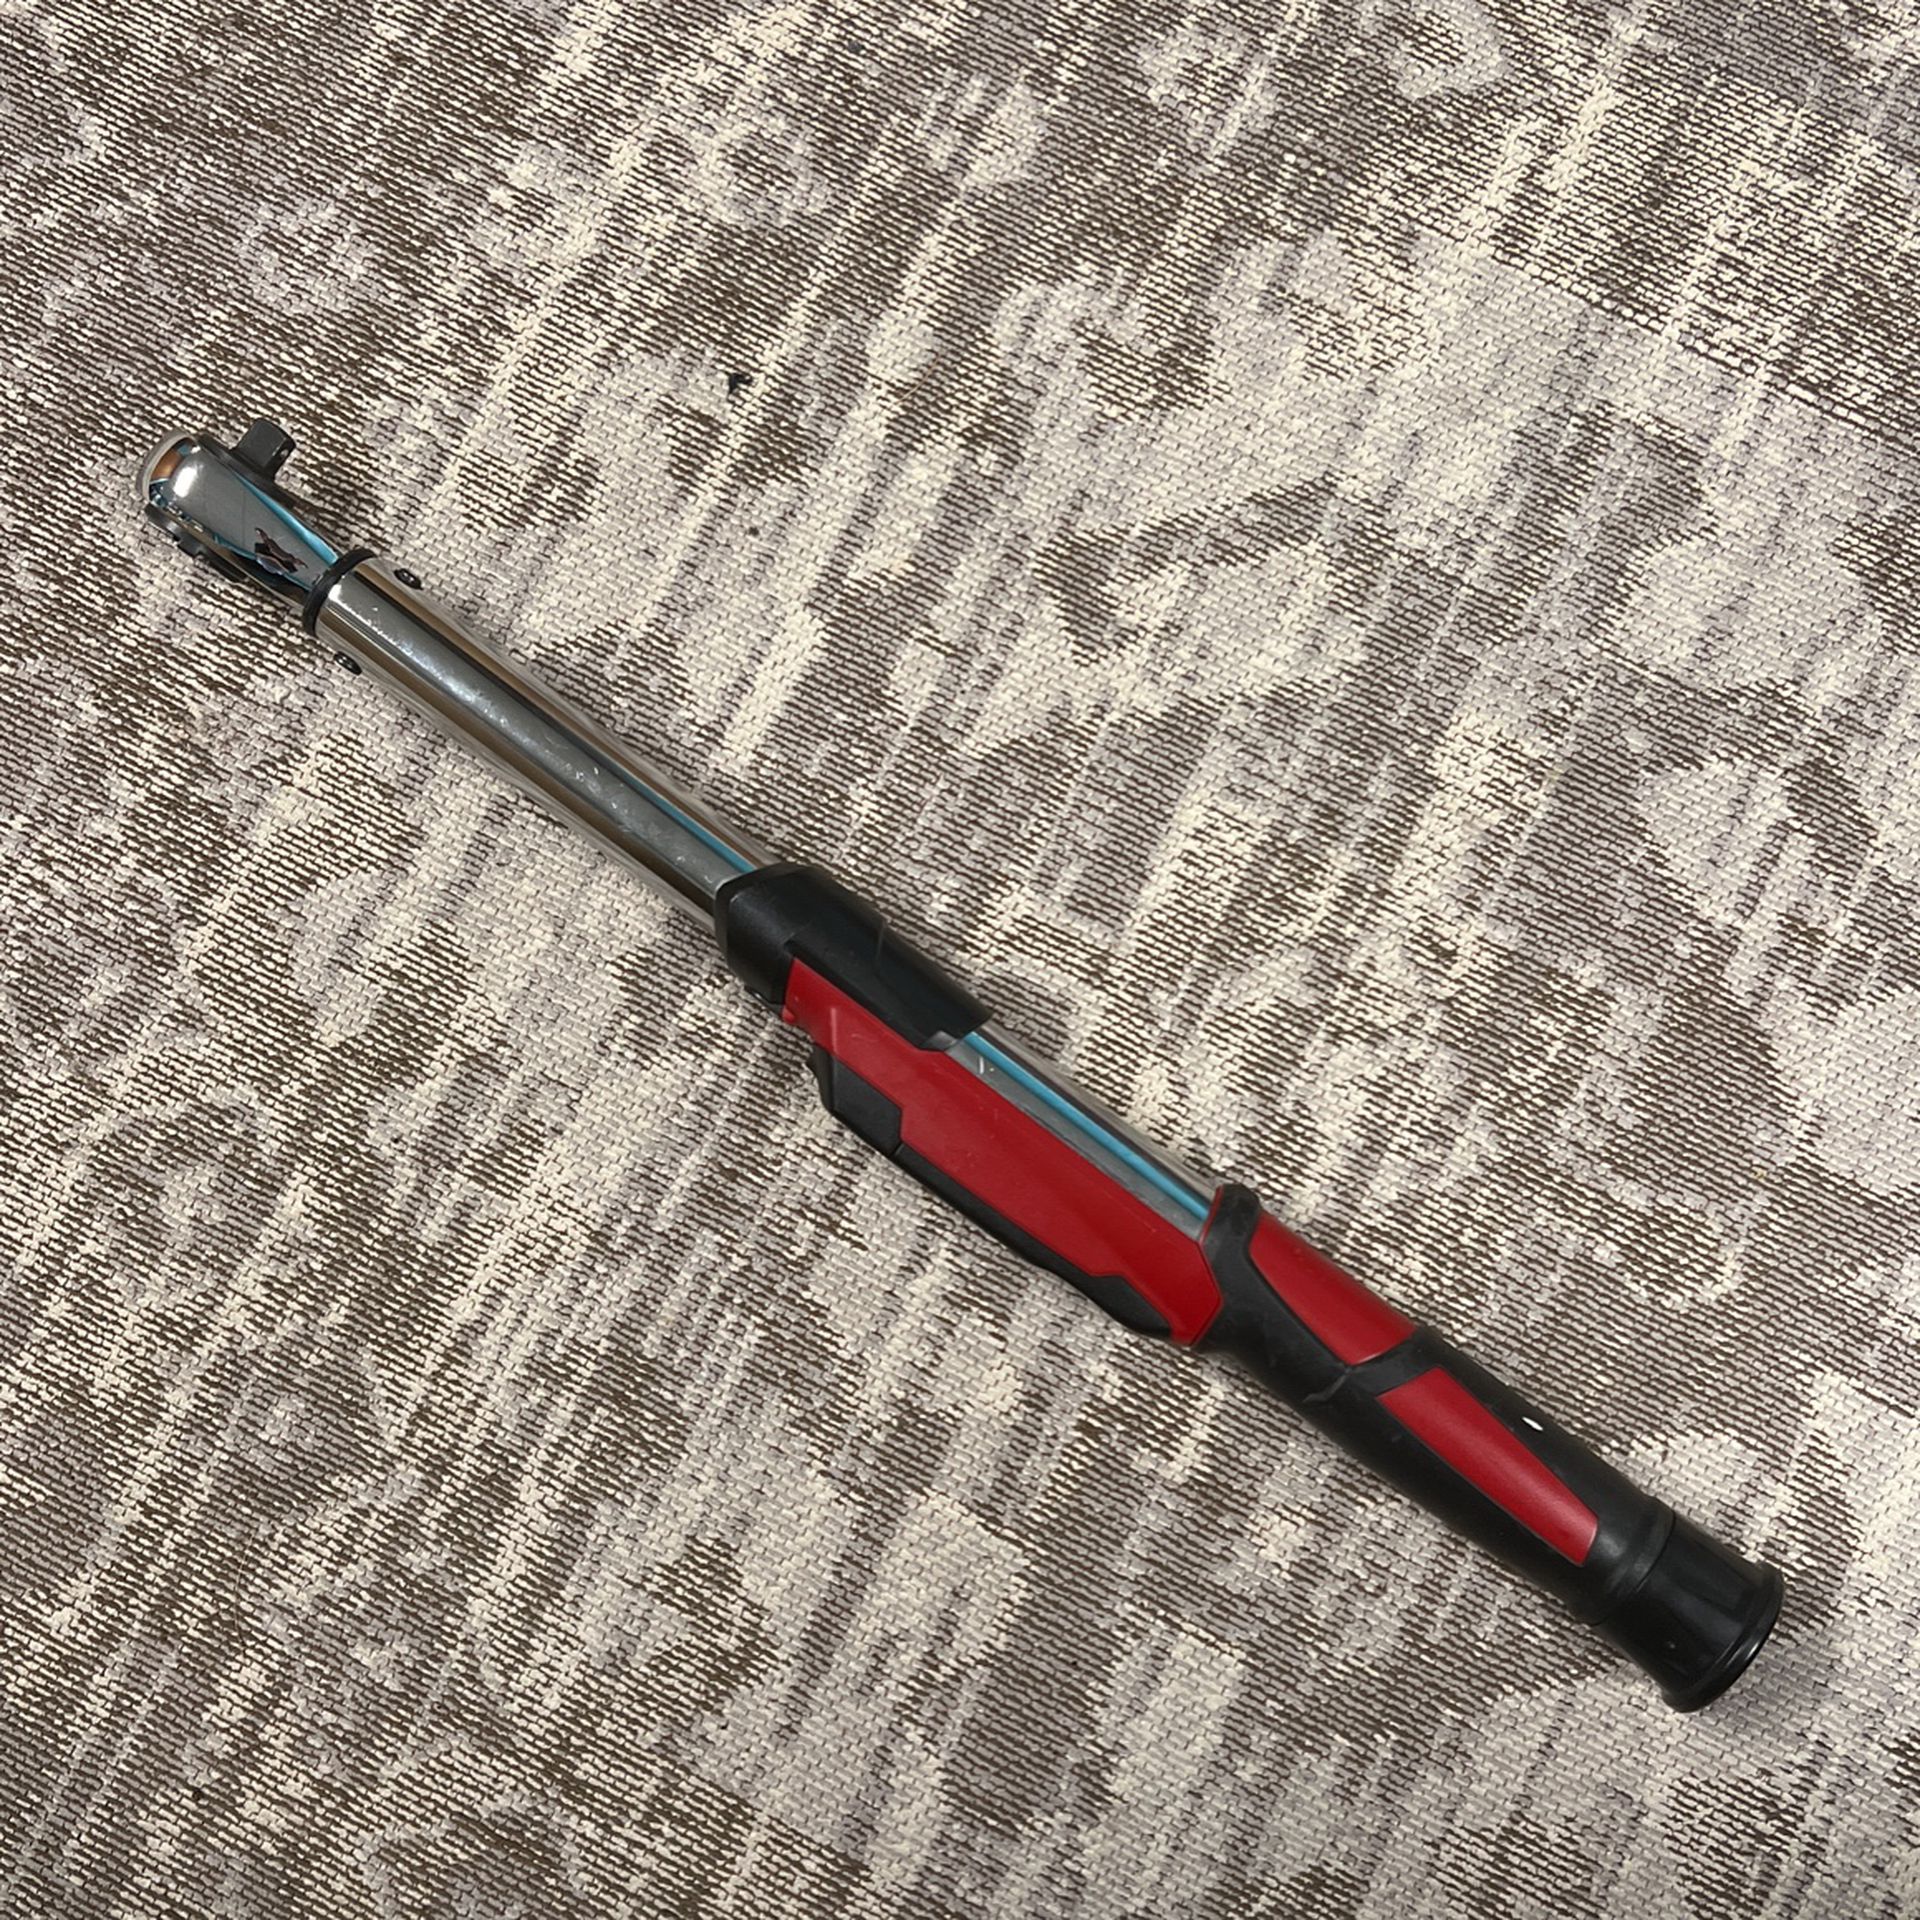 Craftsman 3/8” Digital Torque Wrench